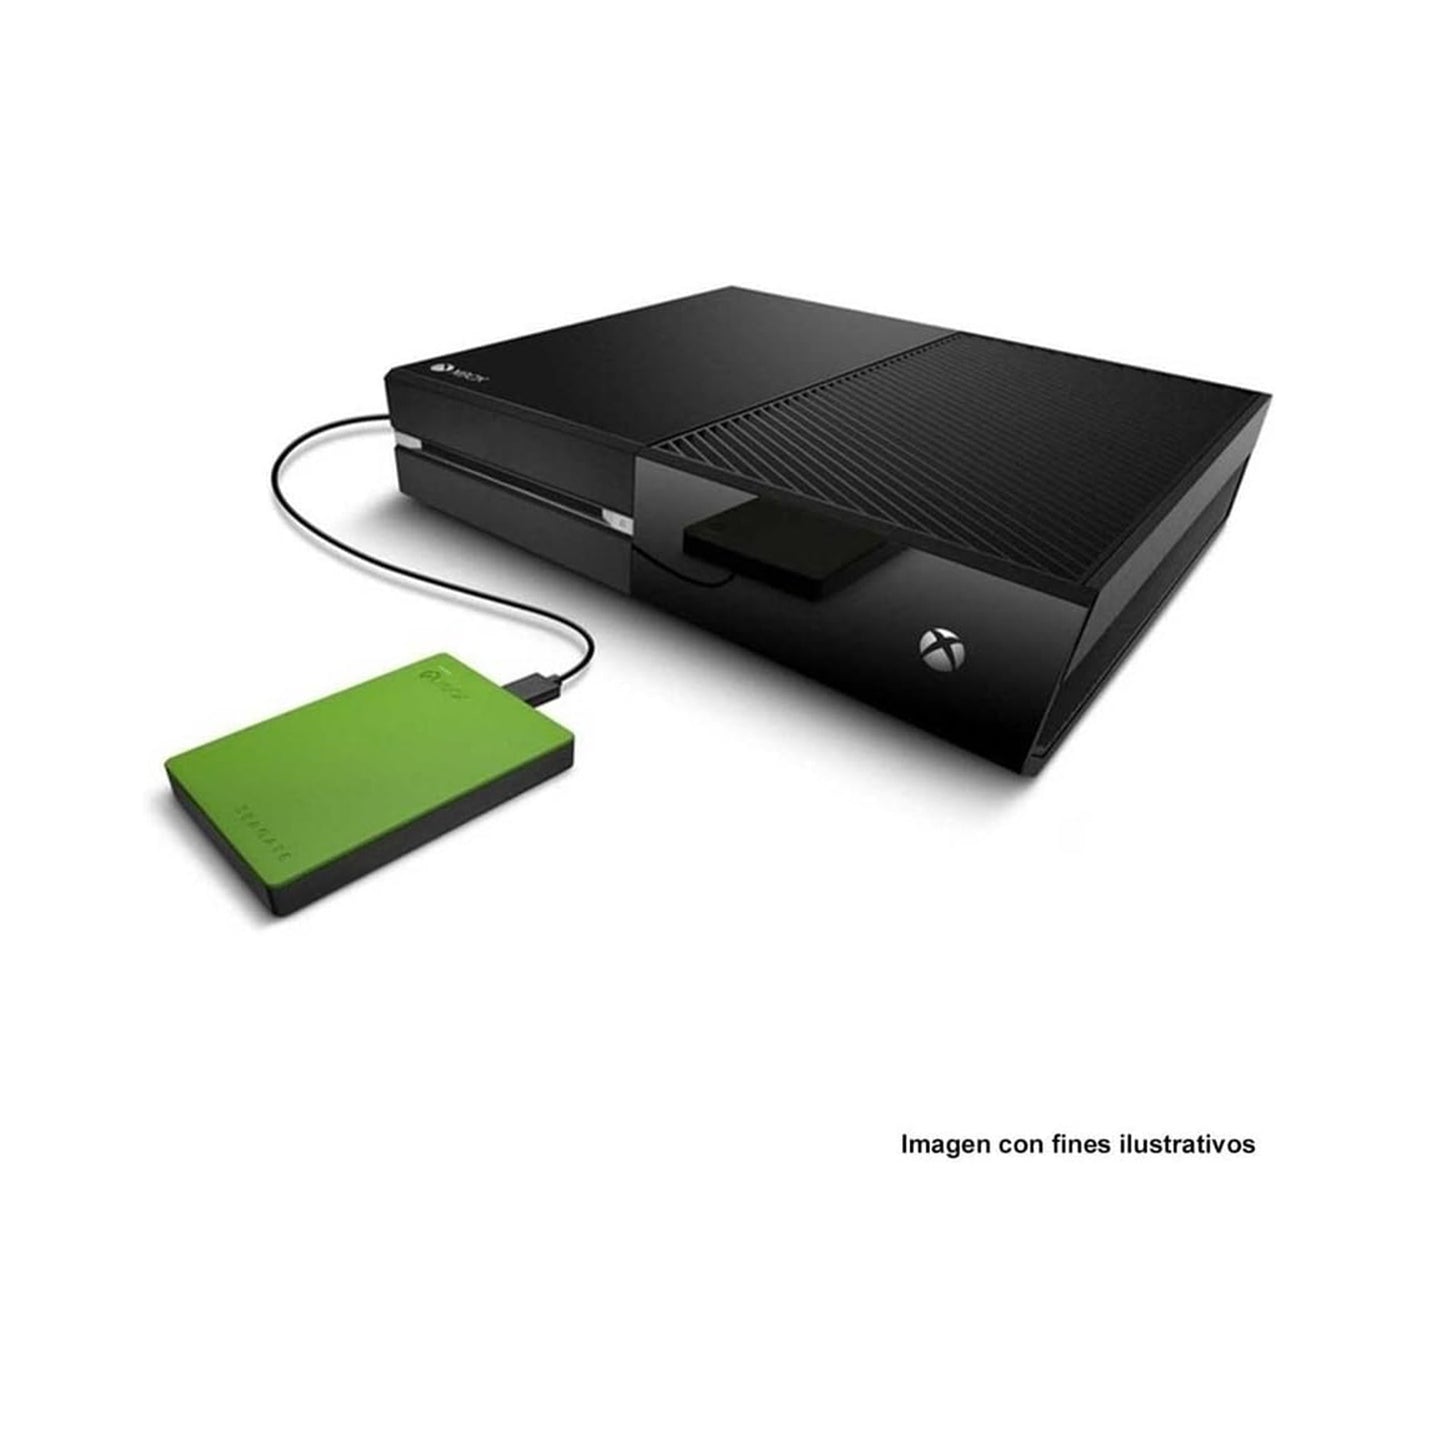 Seagate STEA2000403 Game Drive for Xbox STEA2000403-Hard 2 TB-USB 3.0-Green, 2TB